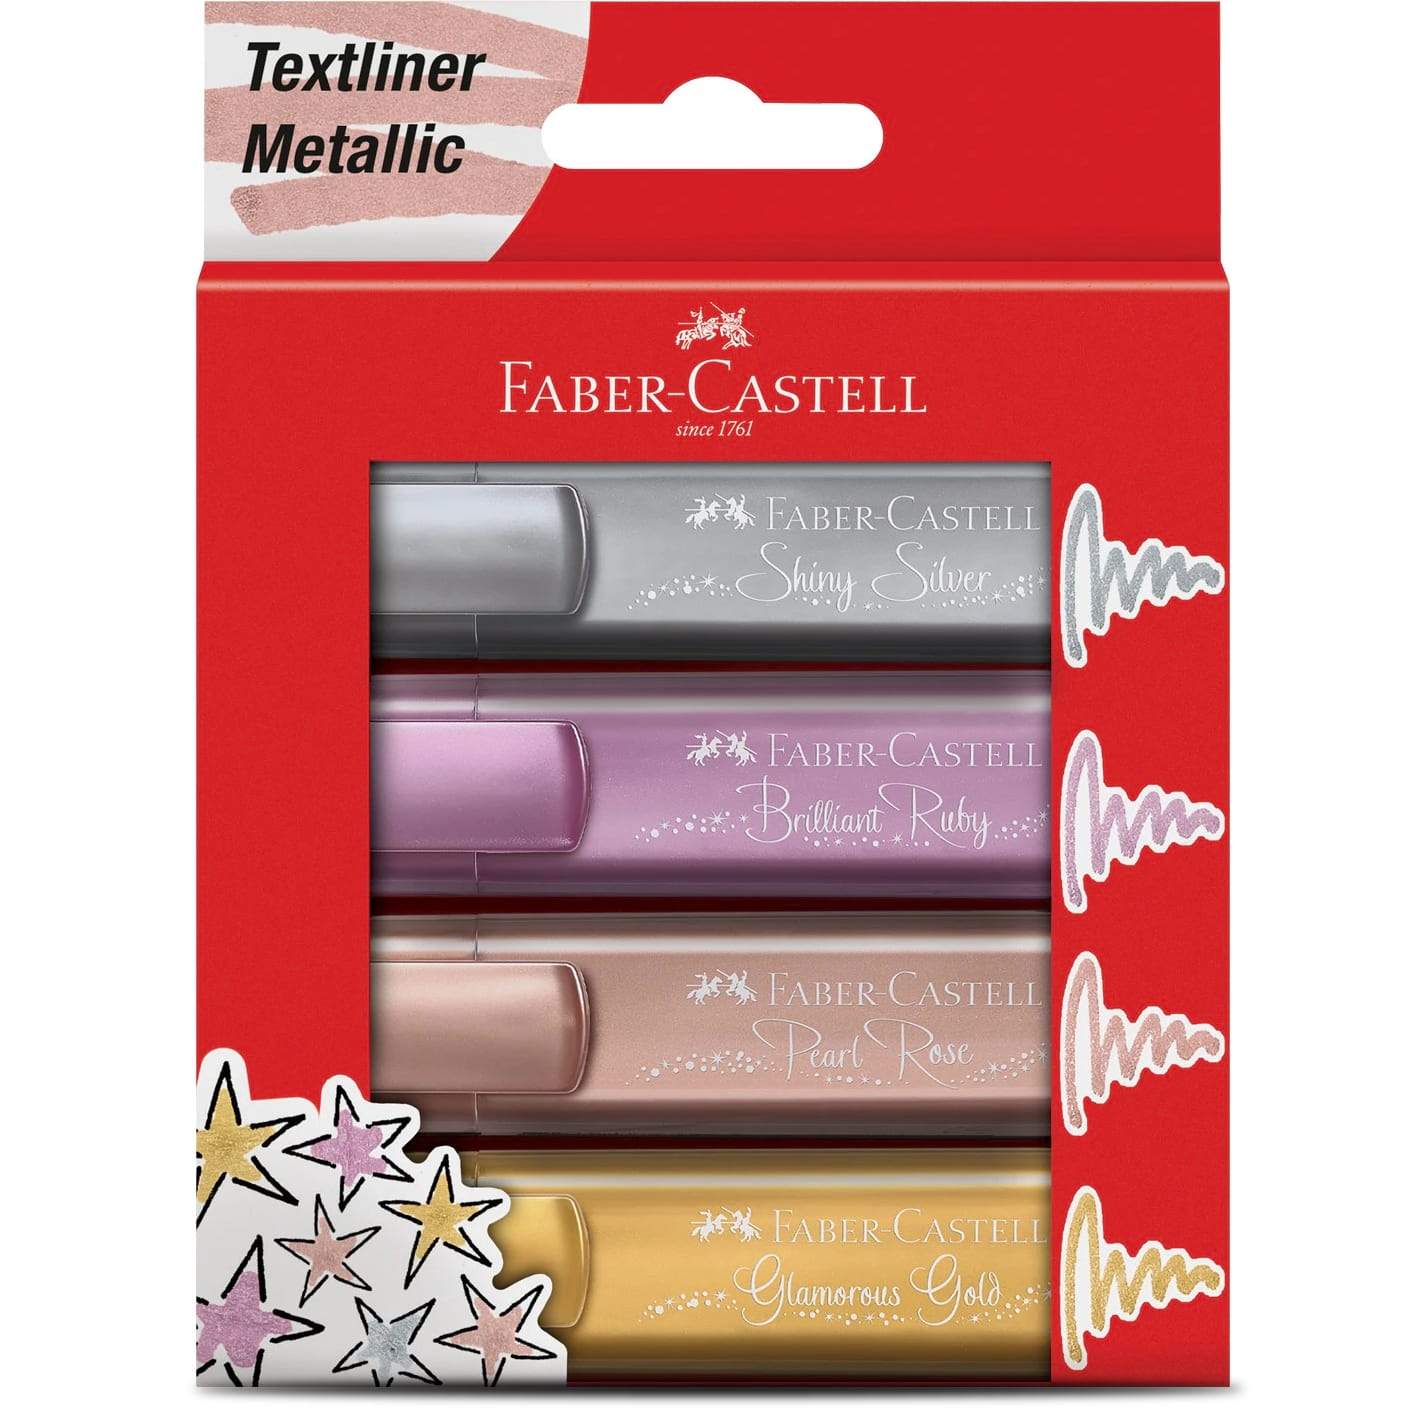 Faber-Castell Metallic Highlighter Textliner-Pen Boutique Ltd